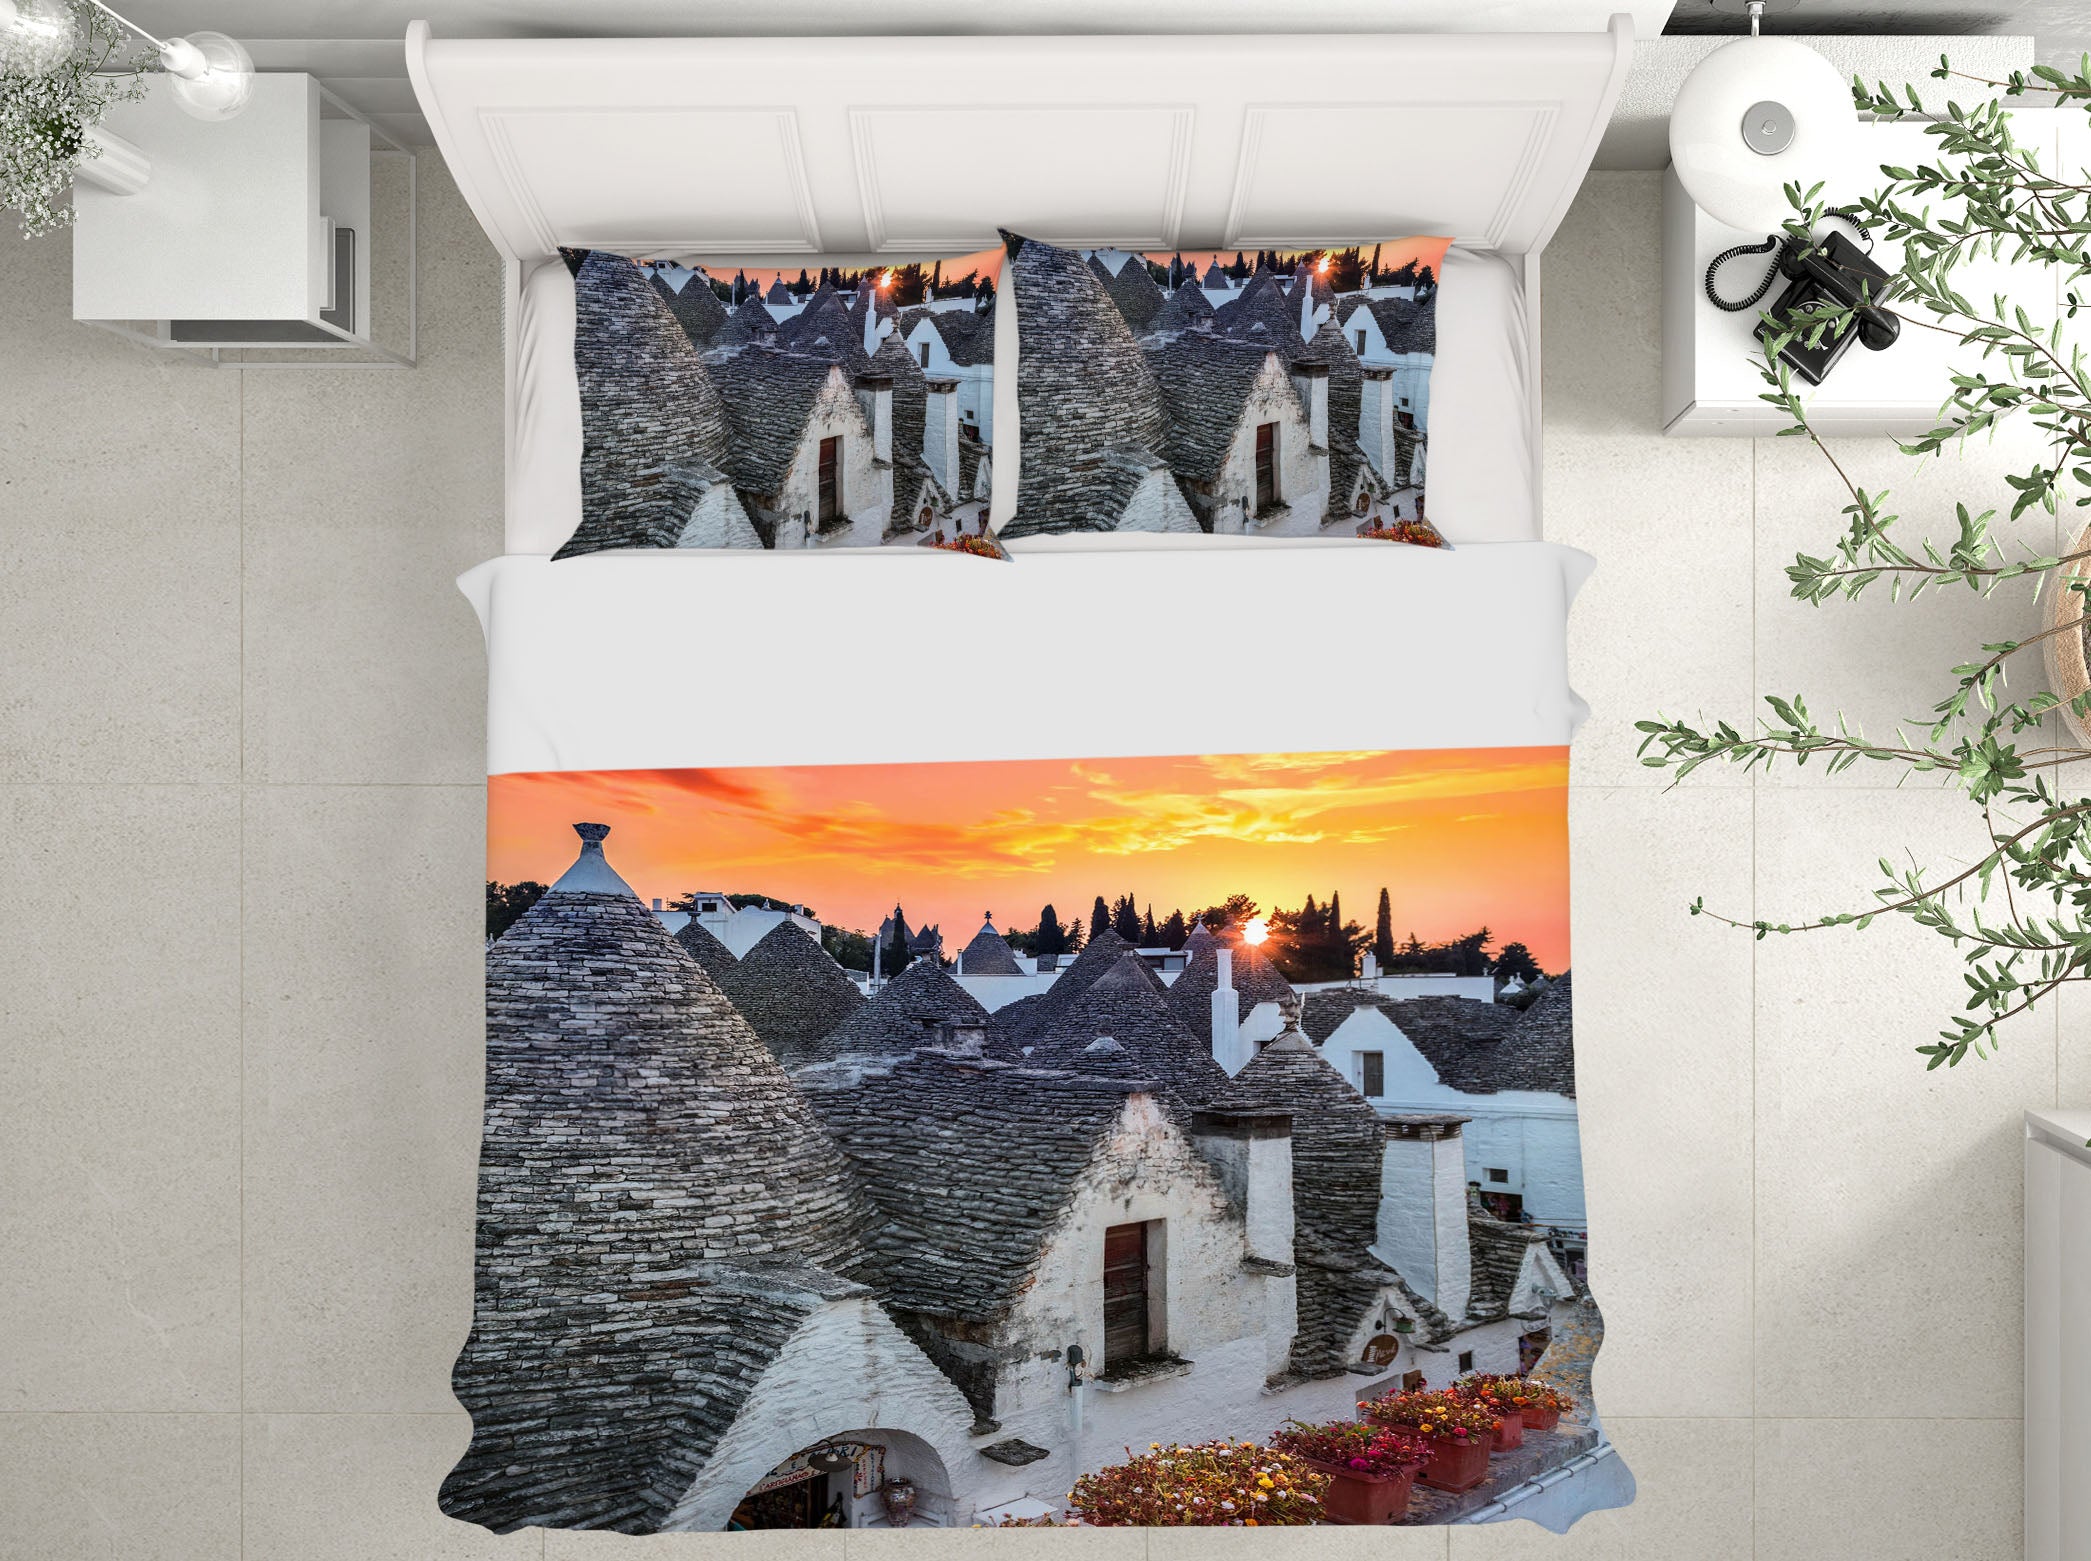 3D Sunrise Village 2101 Marco Carmassi Bedding Bed Pillowcases Quilt